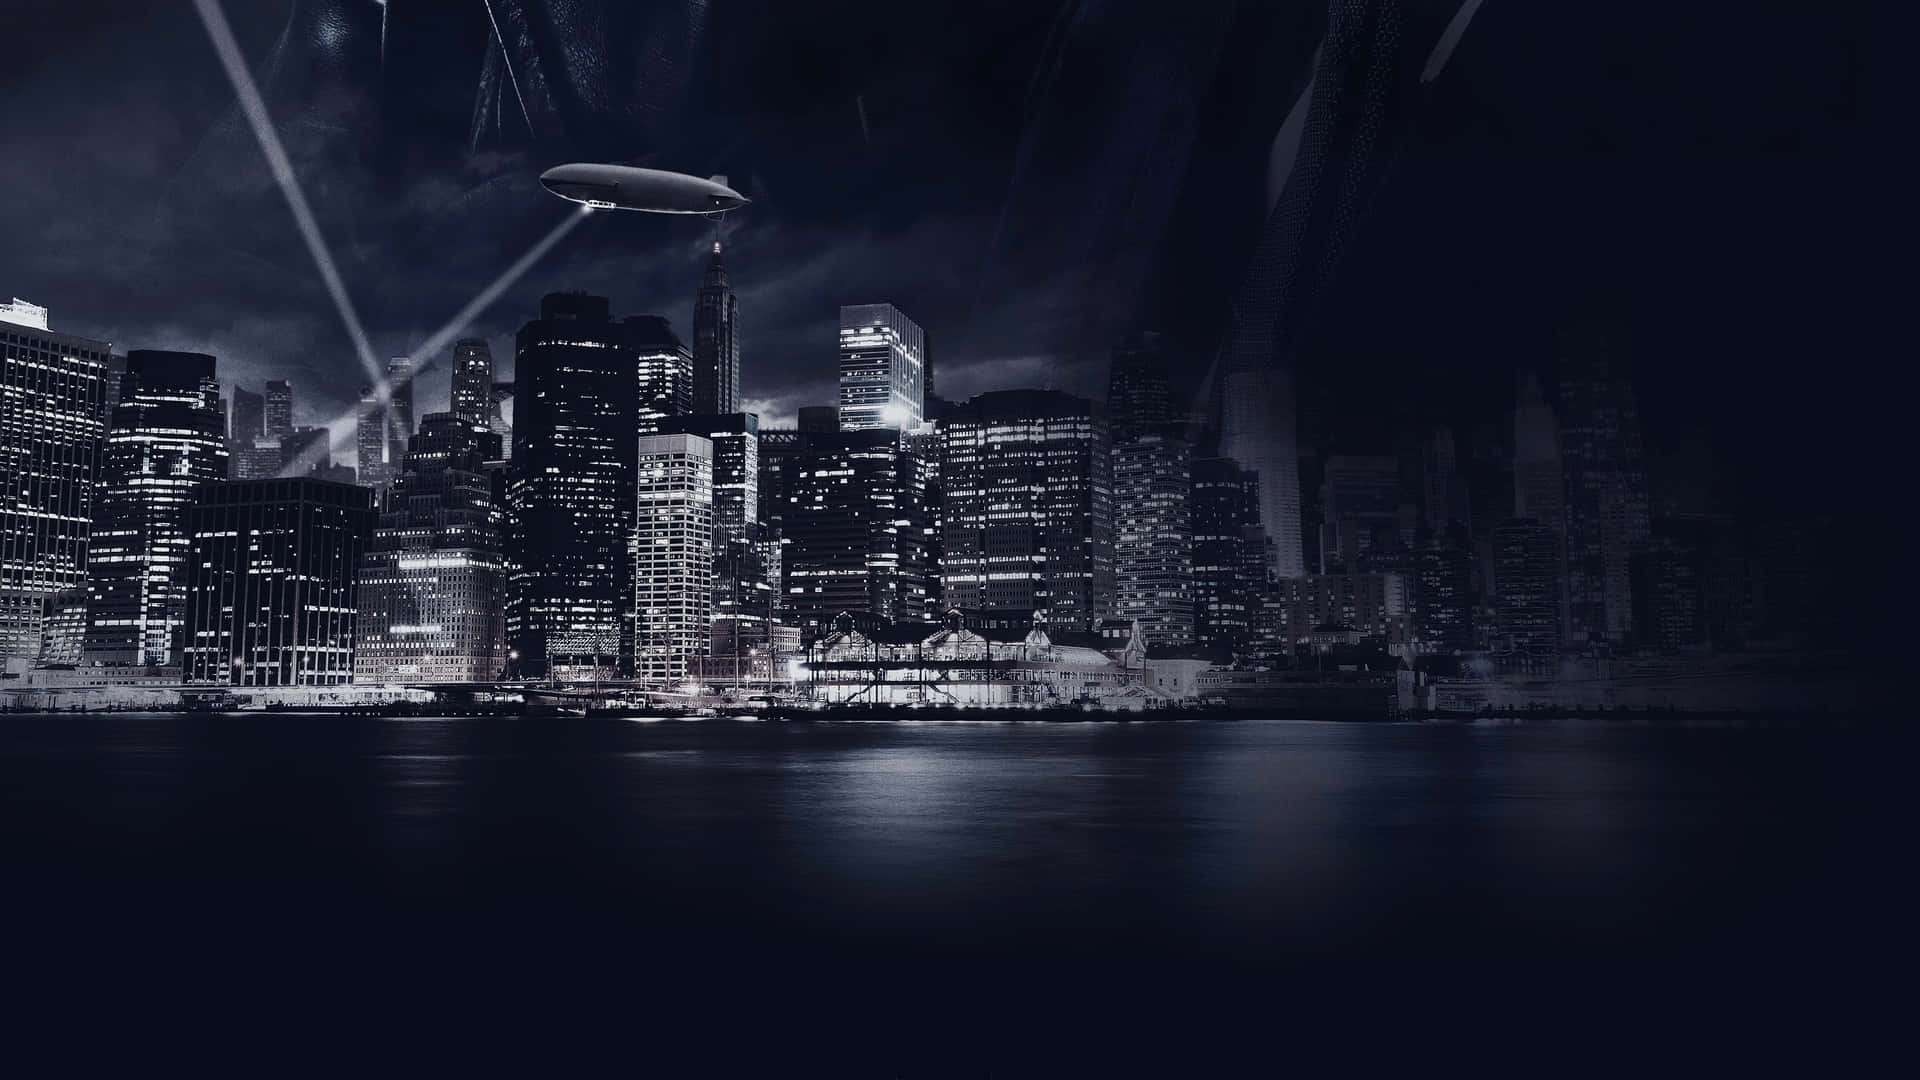 "The Neon Lights Of Gotham City" Wallpaper